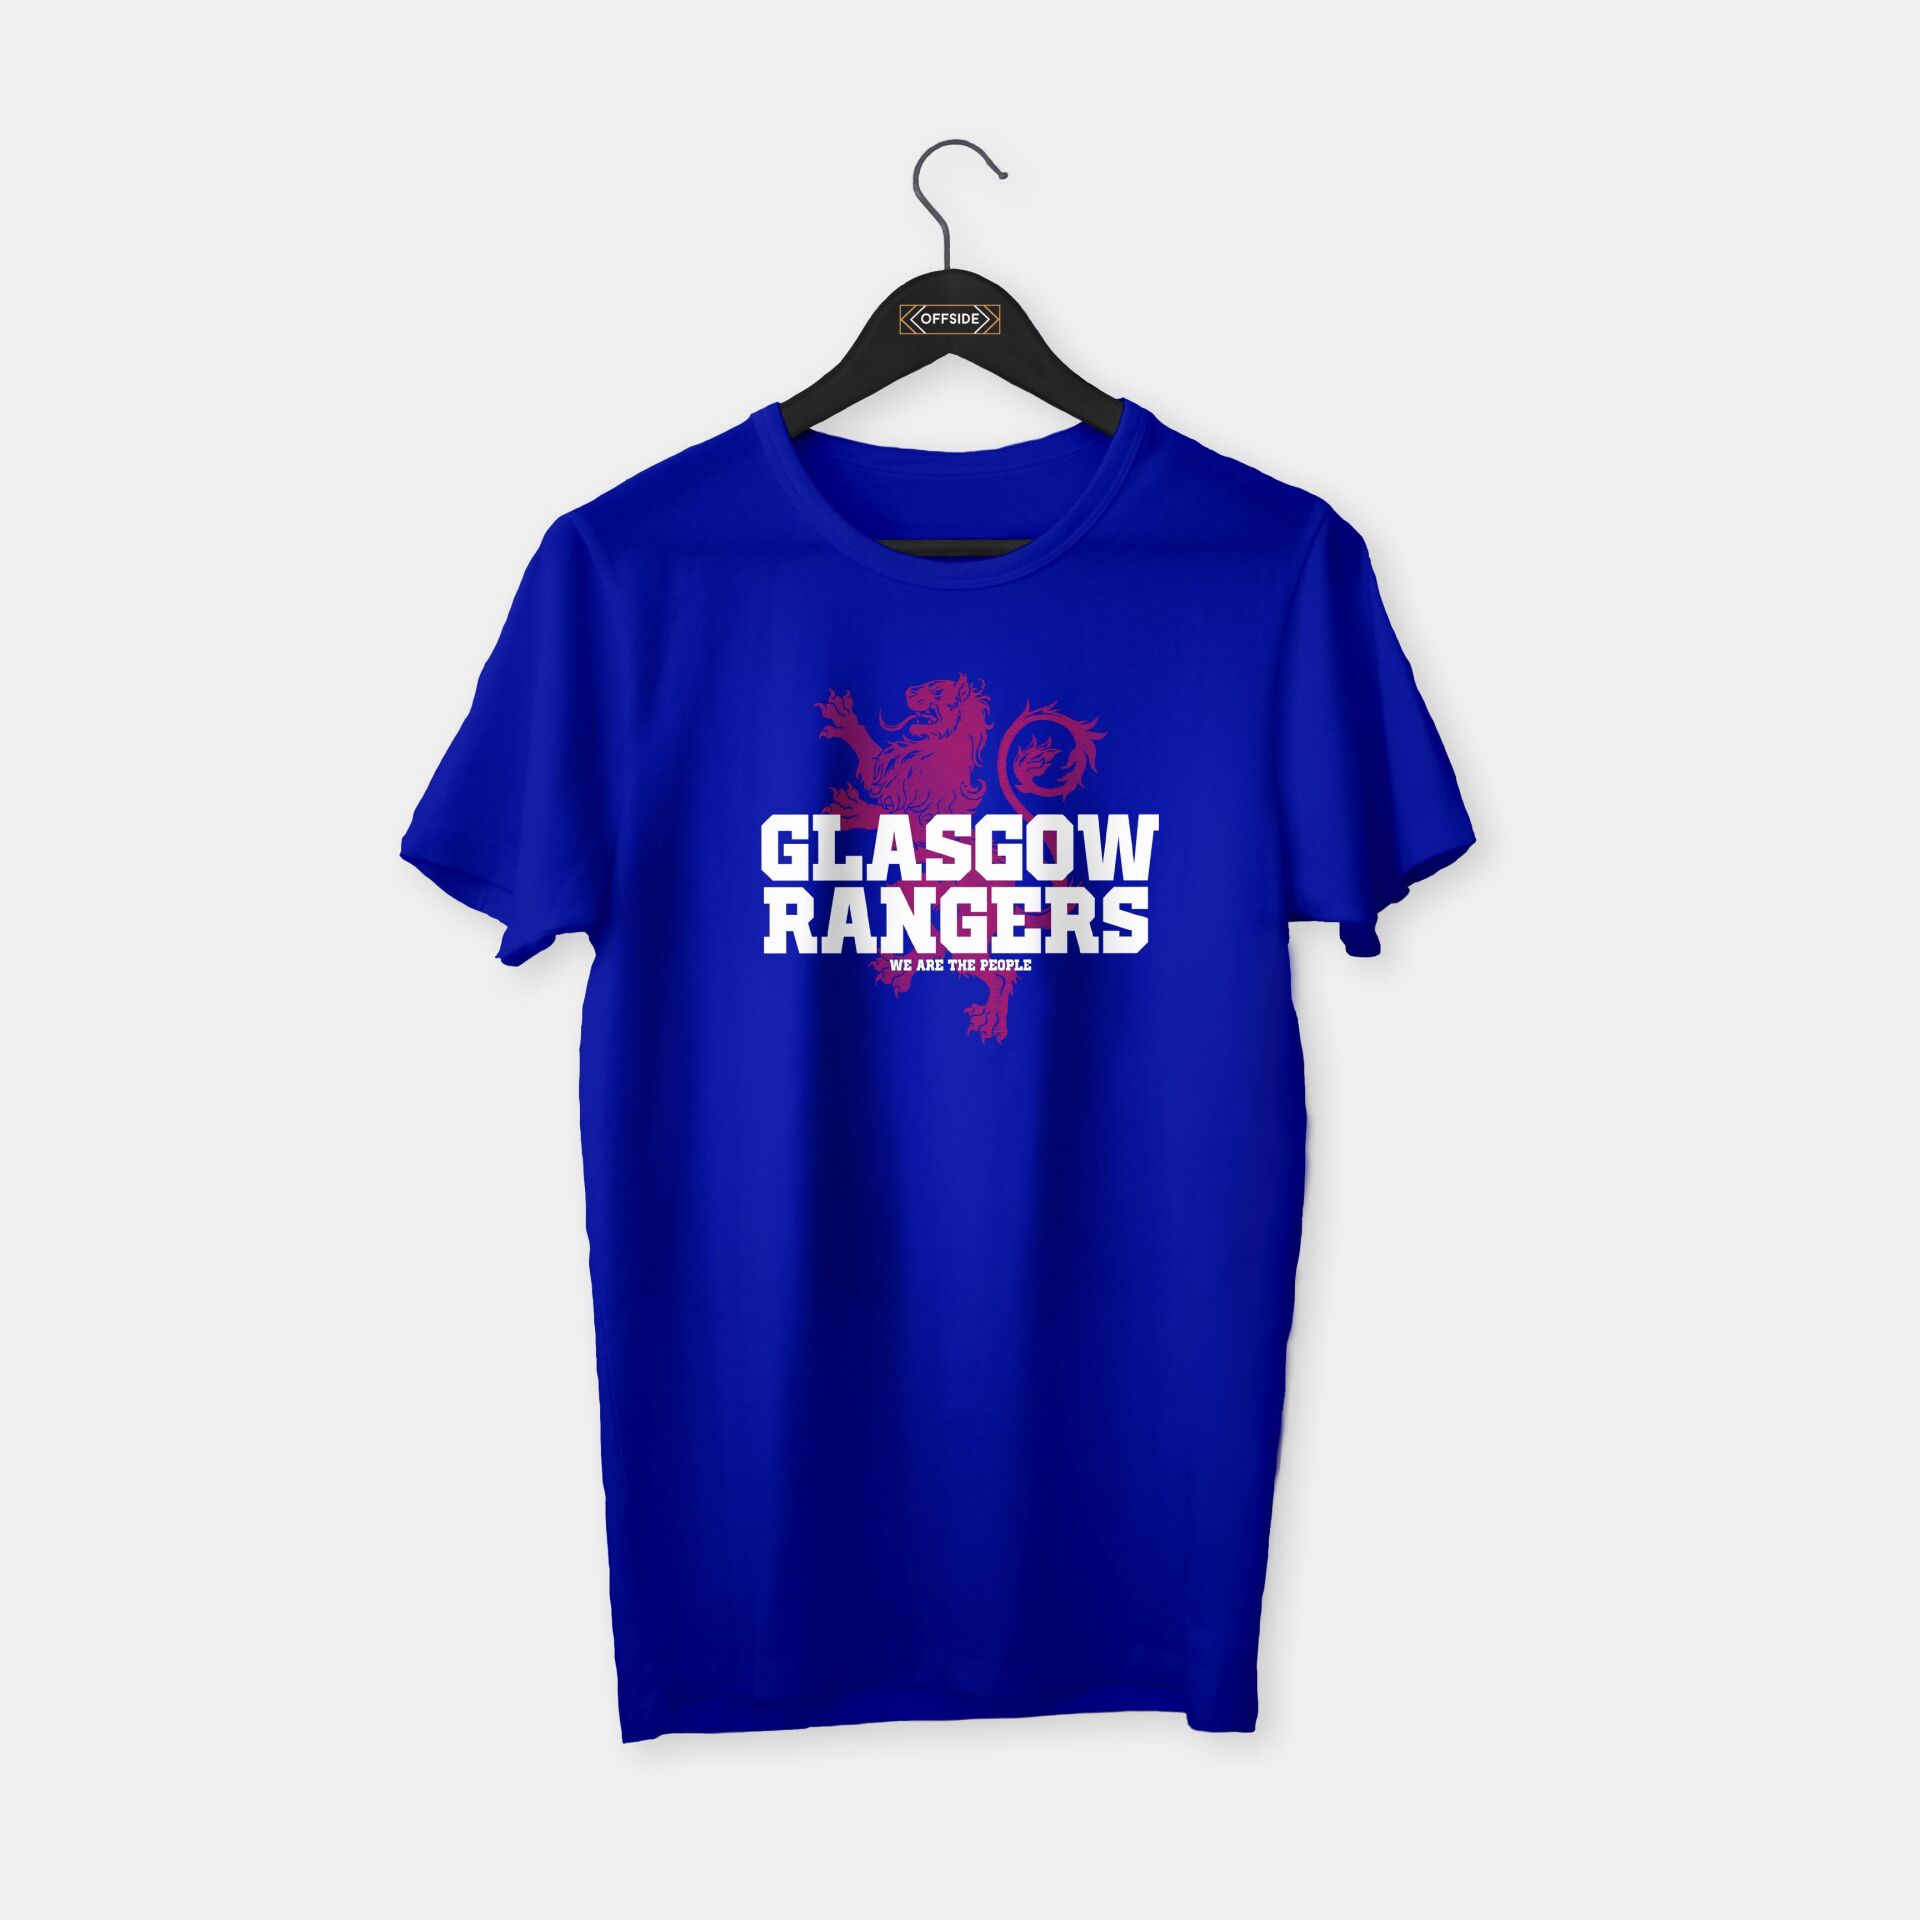 Glasgow Rangers T-shirt